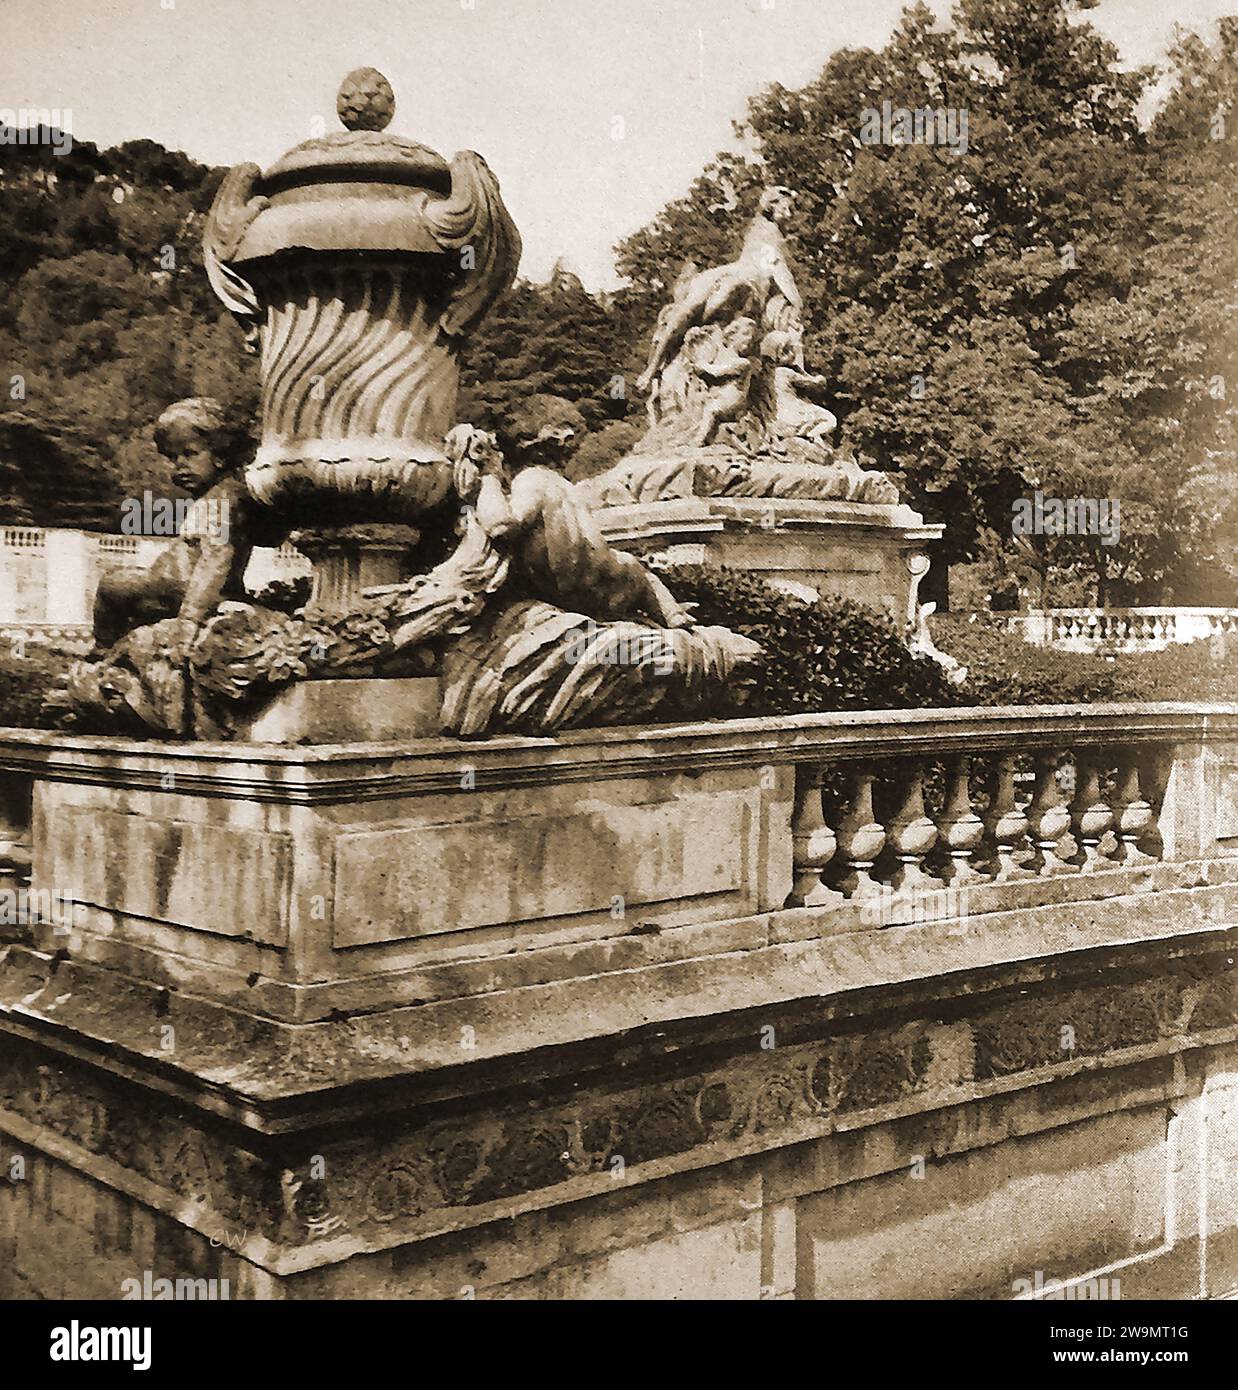 Frankreich 1939 - 18. Jahrhundert Skulptur in Nimes - Frankreich 1939 - Skulptur du XVIIIe siècle à Nîmes Stockfoto